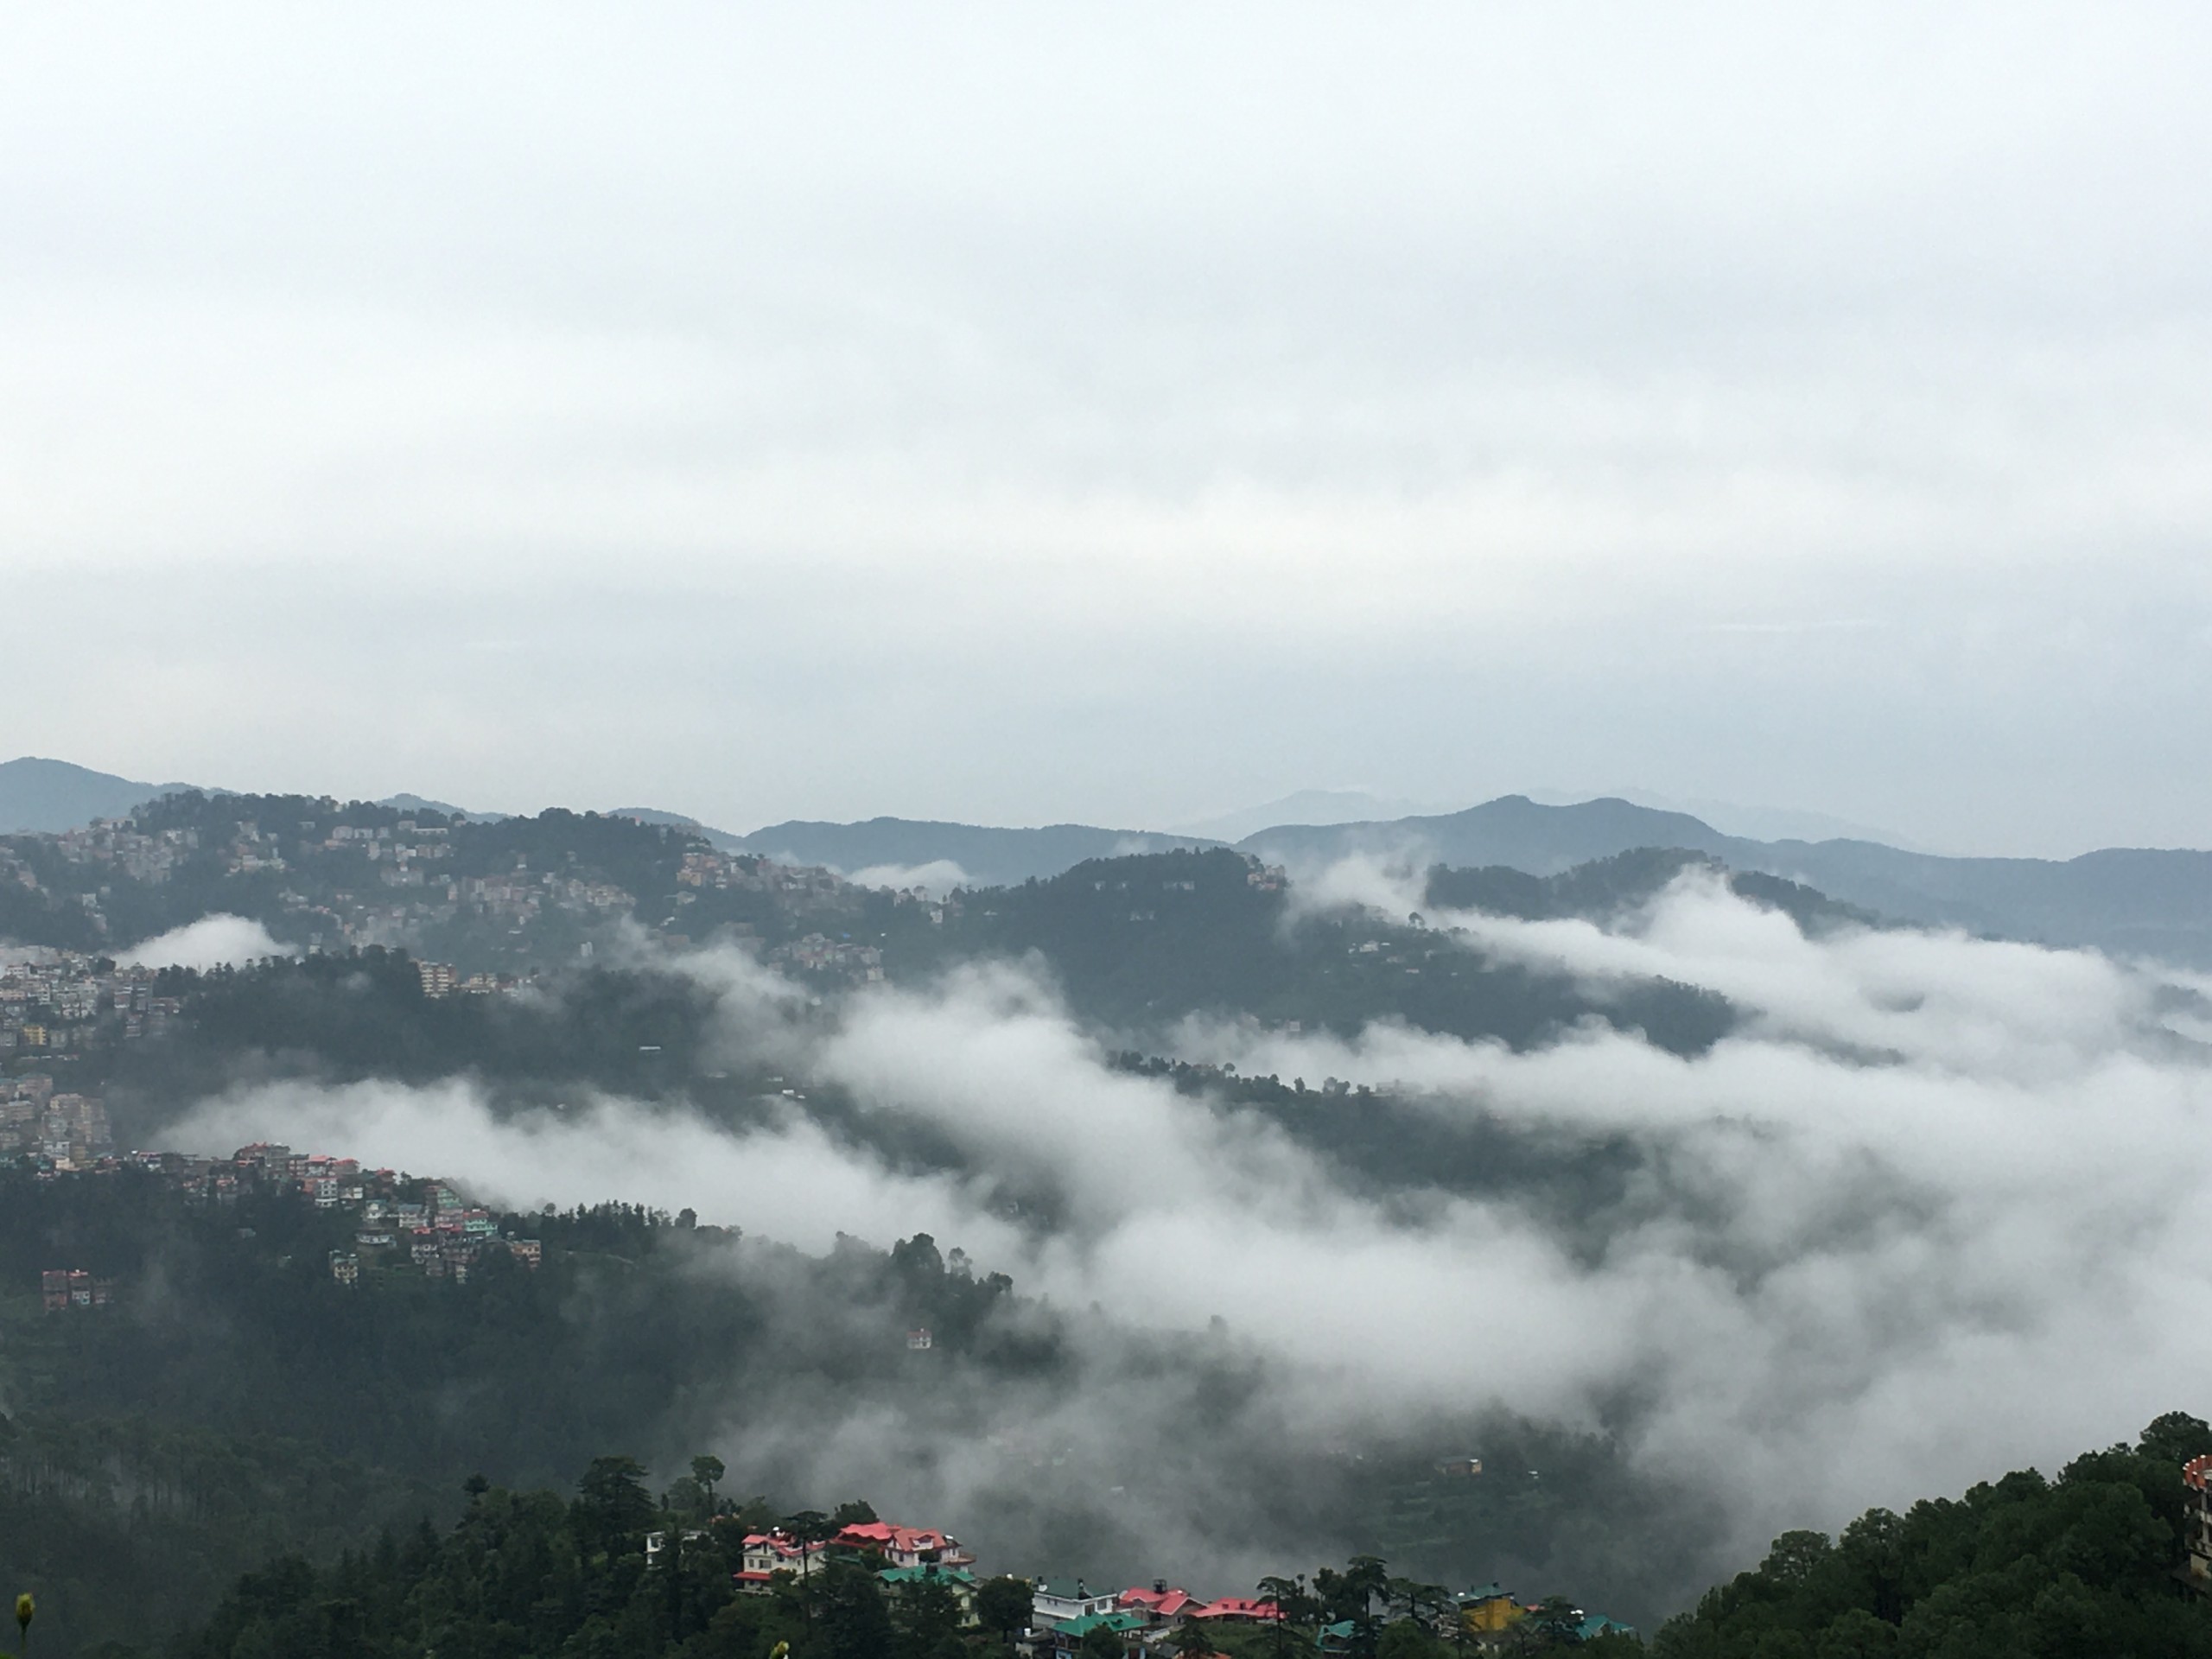 Fog on the mountains